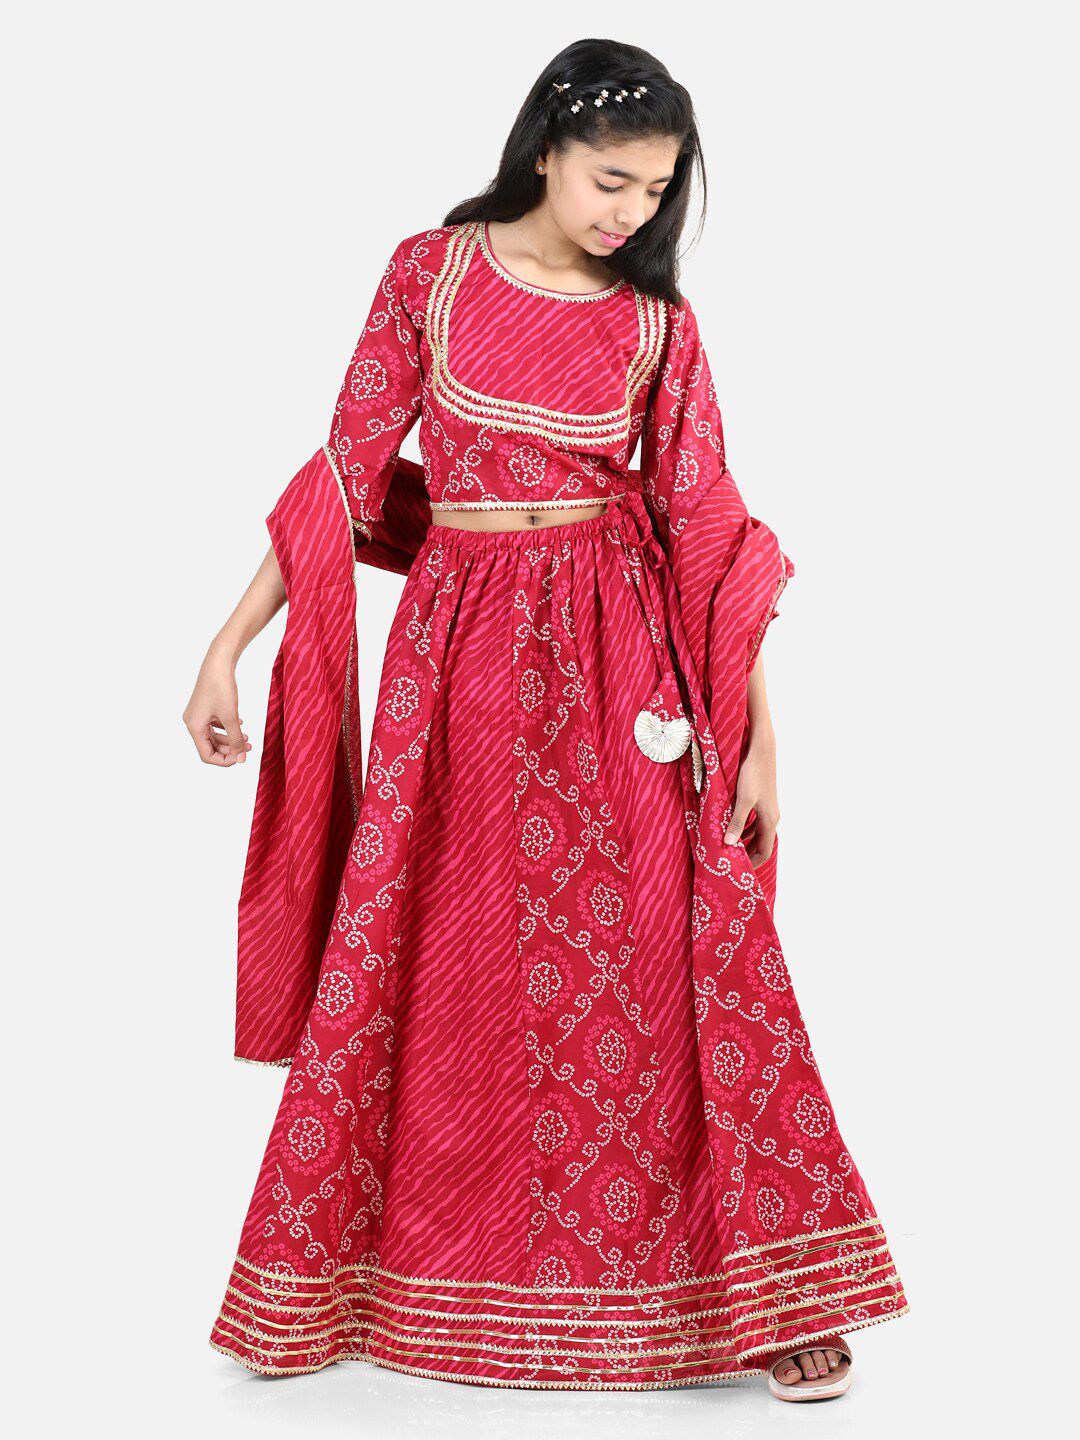 BownBee Girls Badhani Printed Ready to Wear Lehenga & Blouse With Dupatta Price in India